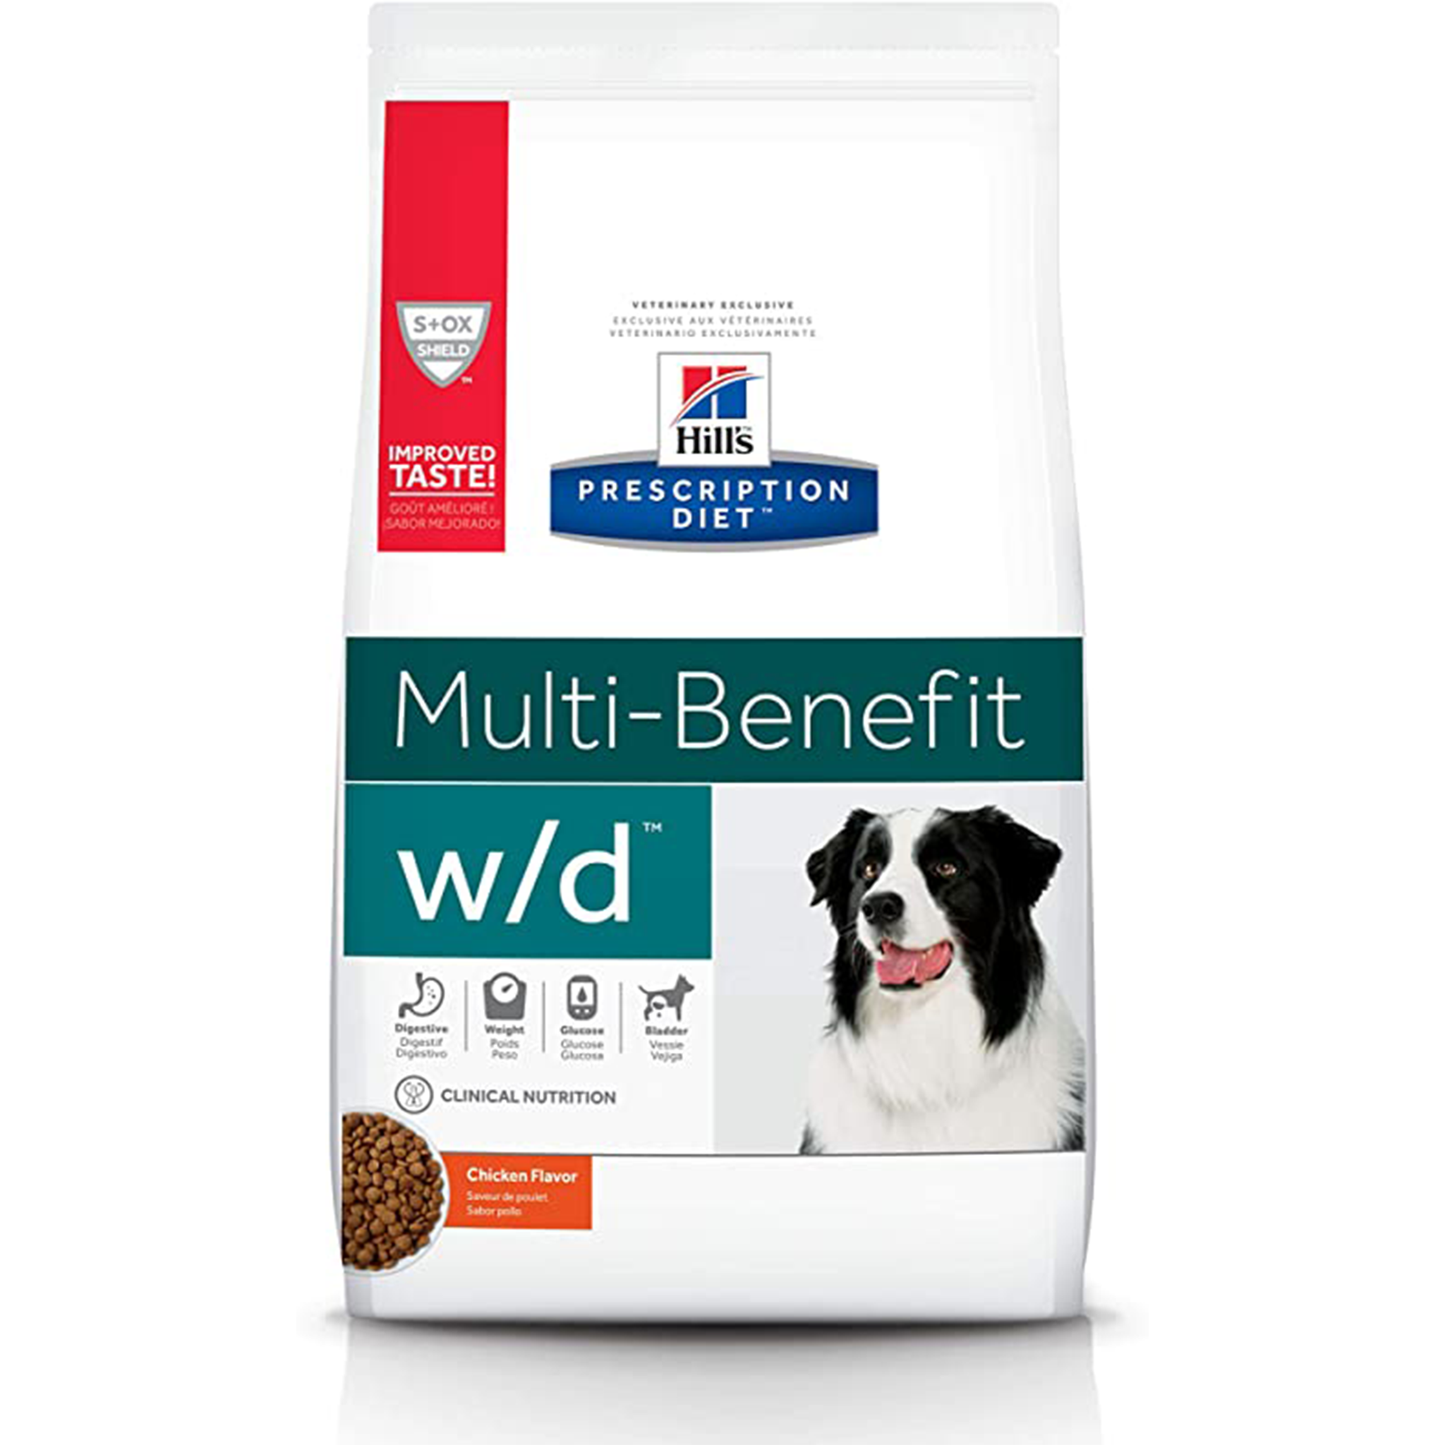 Hill's W/D Canine (8.5lbs bag)